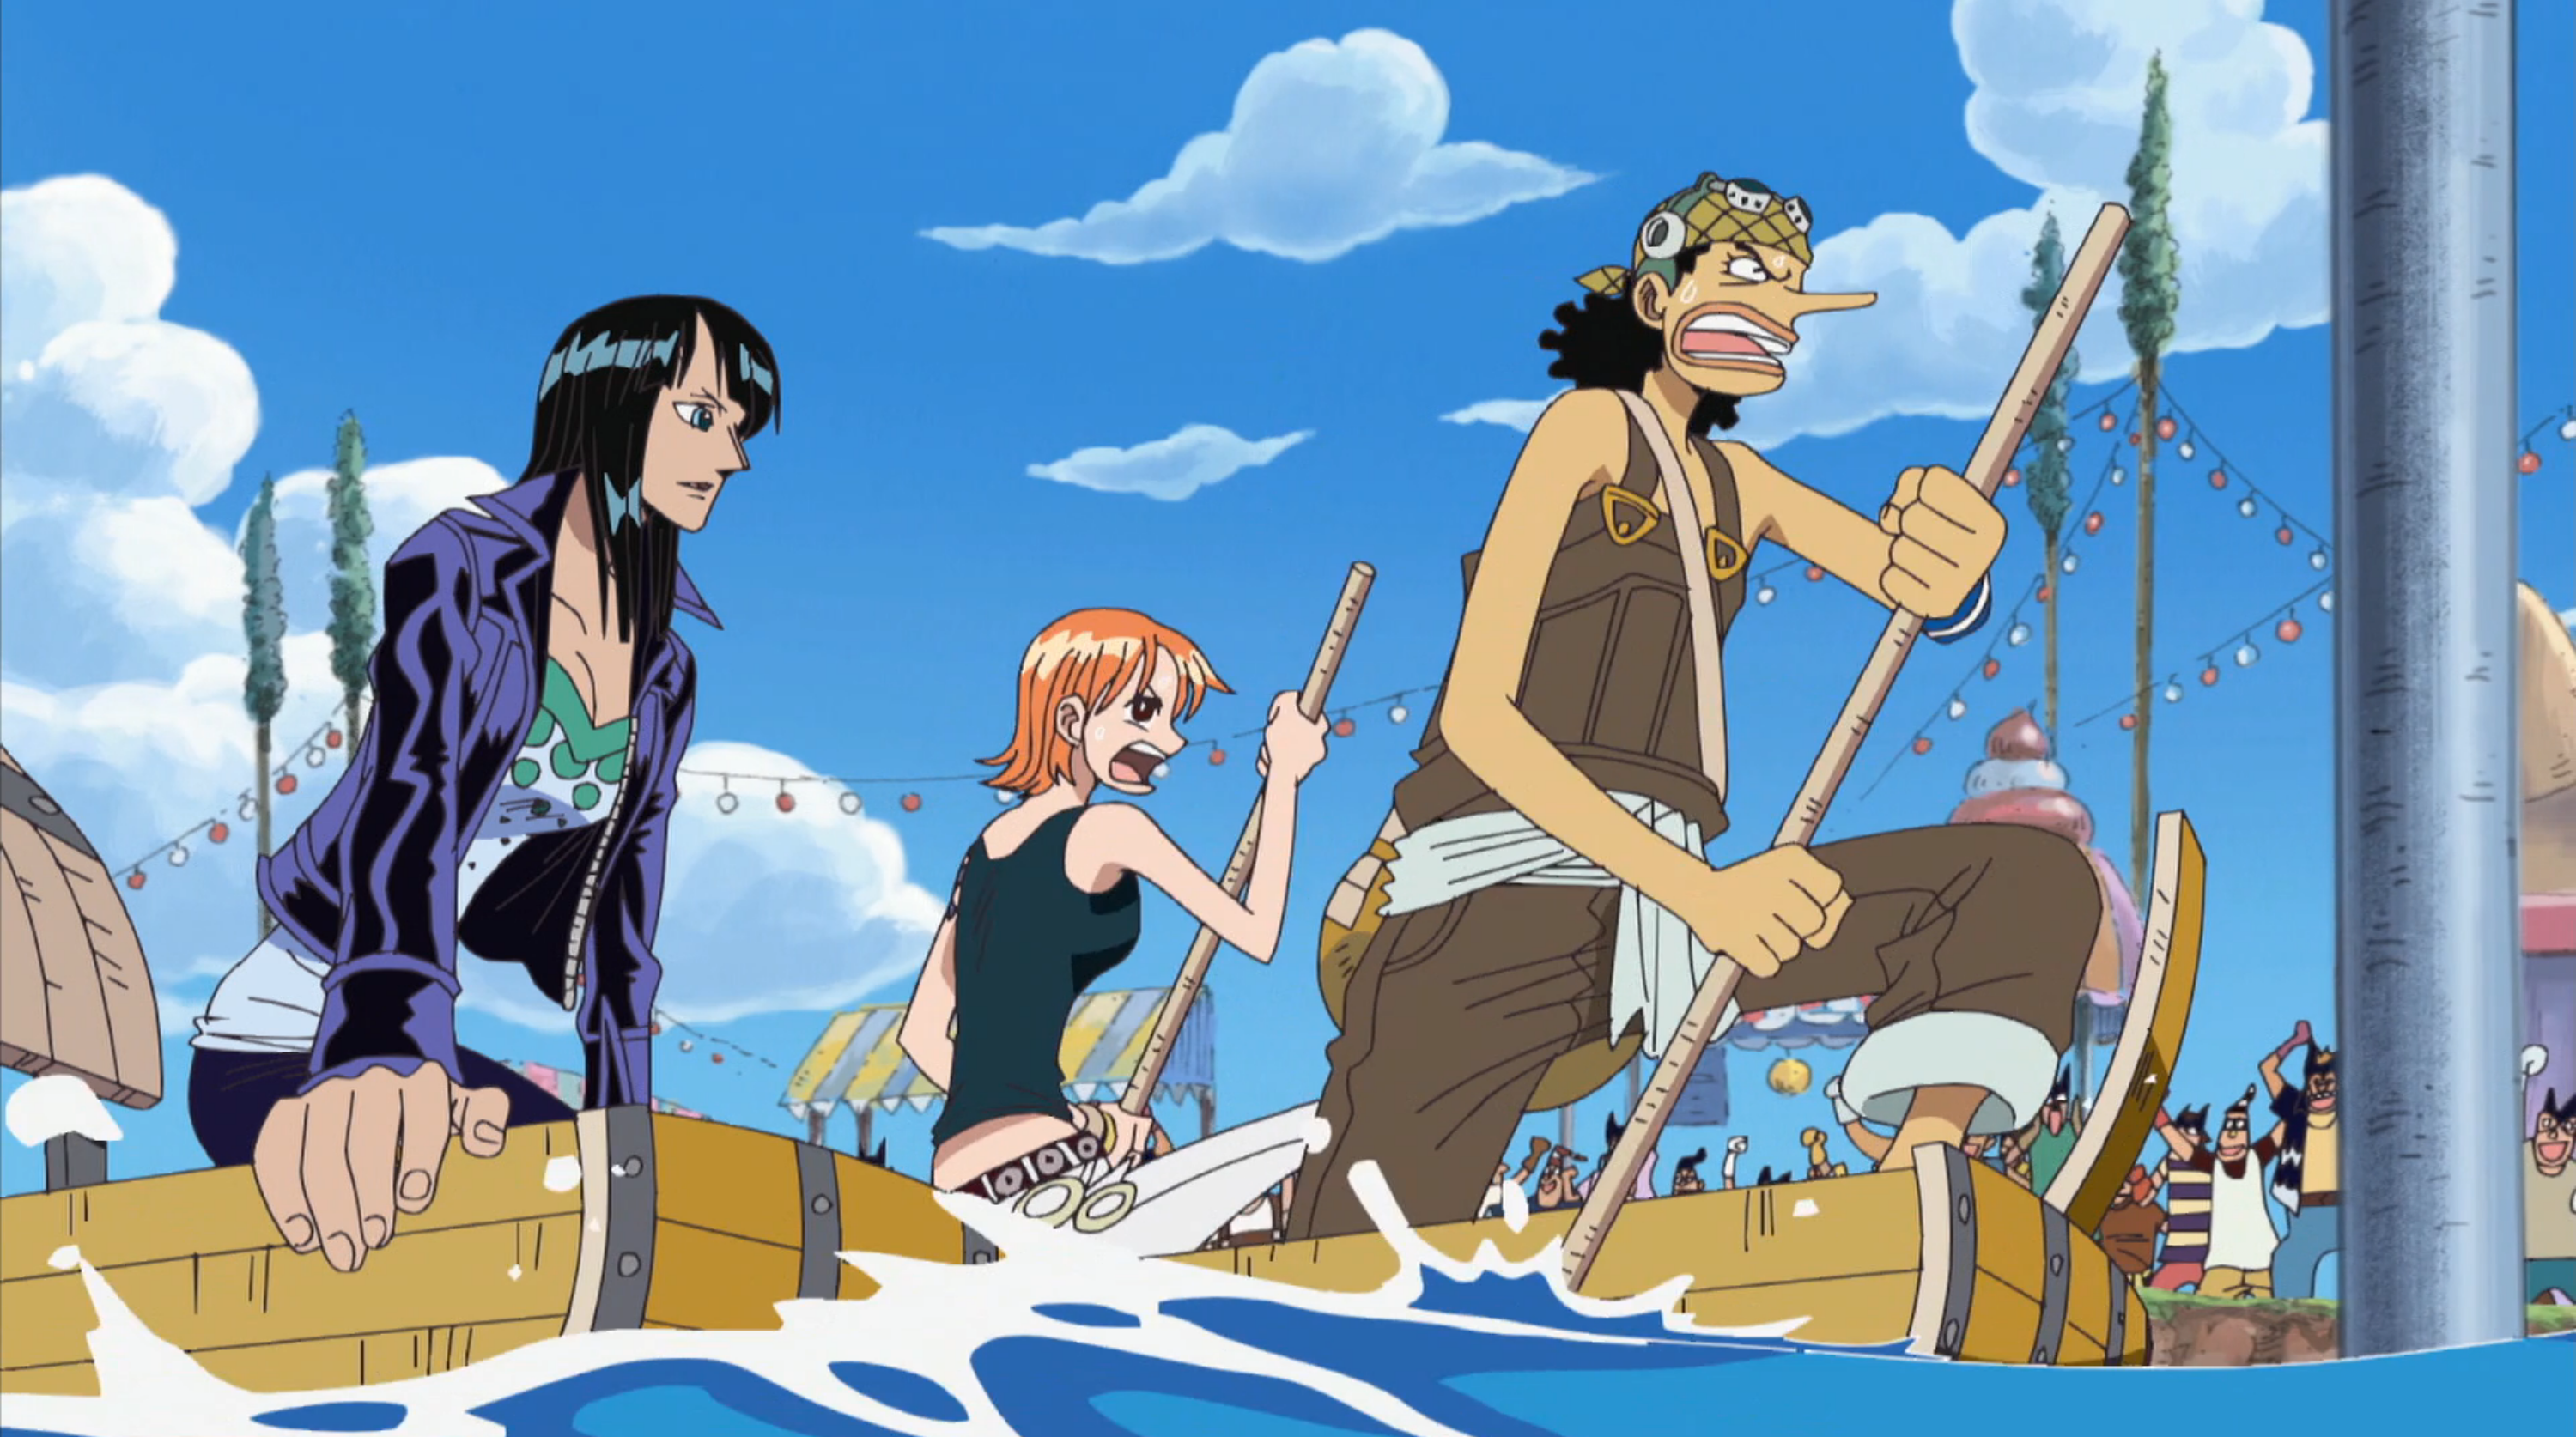 Ussop, Nami, and Robin ride on Ussop's barrel boat (Oda, Eiichiro, creator. One Piece. 1999-present. Toei Animation.).